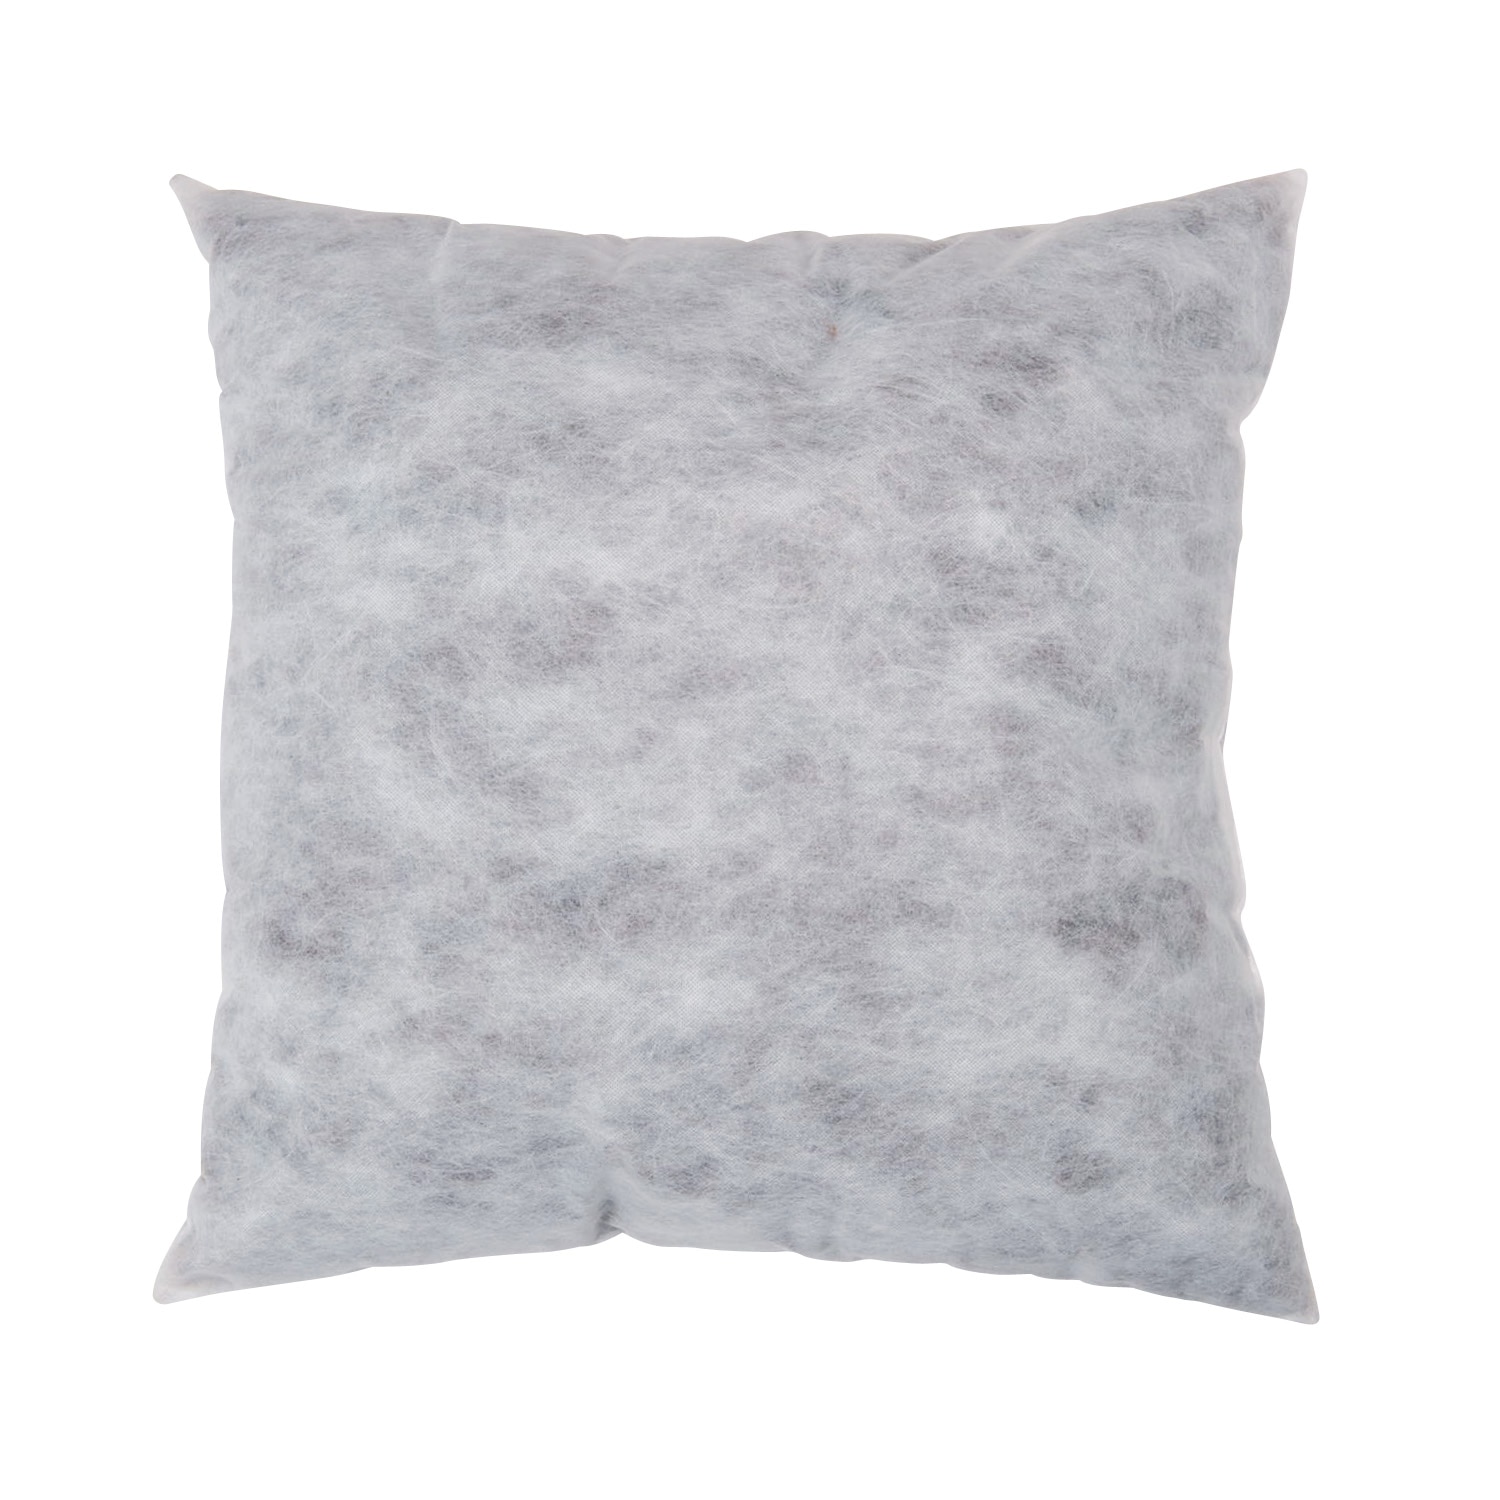 22-inch Non-Woven Polyester Pillow Insert